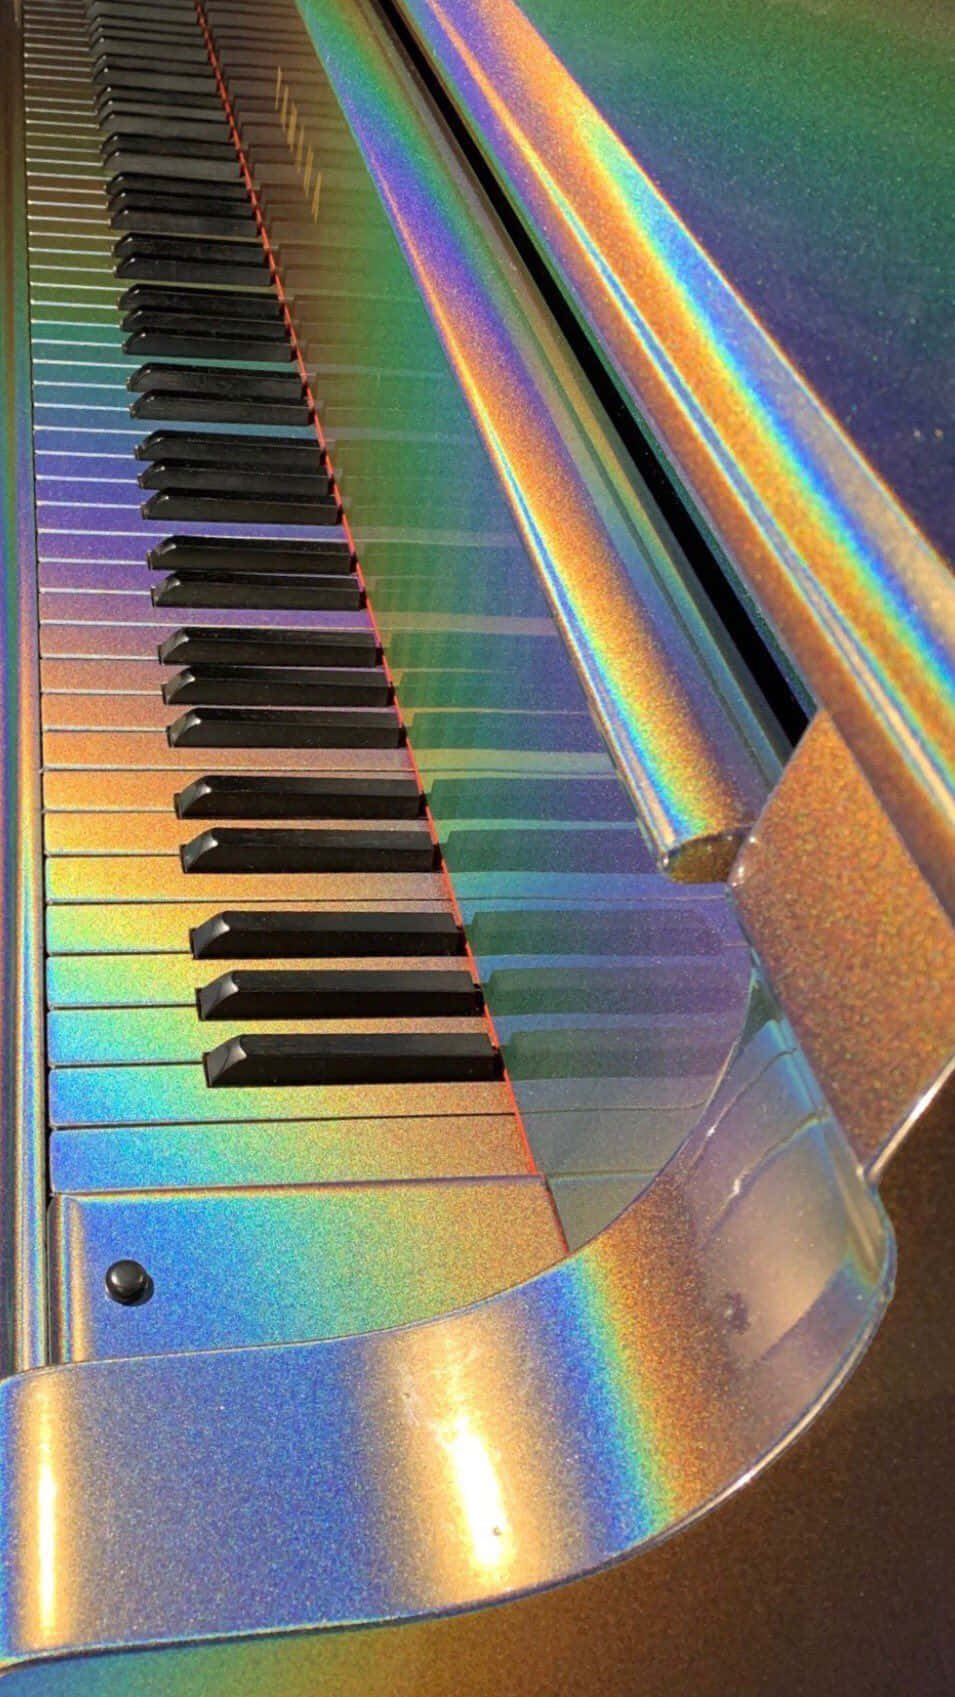 Seamless relationship between Music&Piano